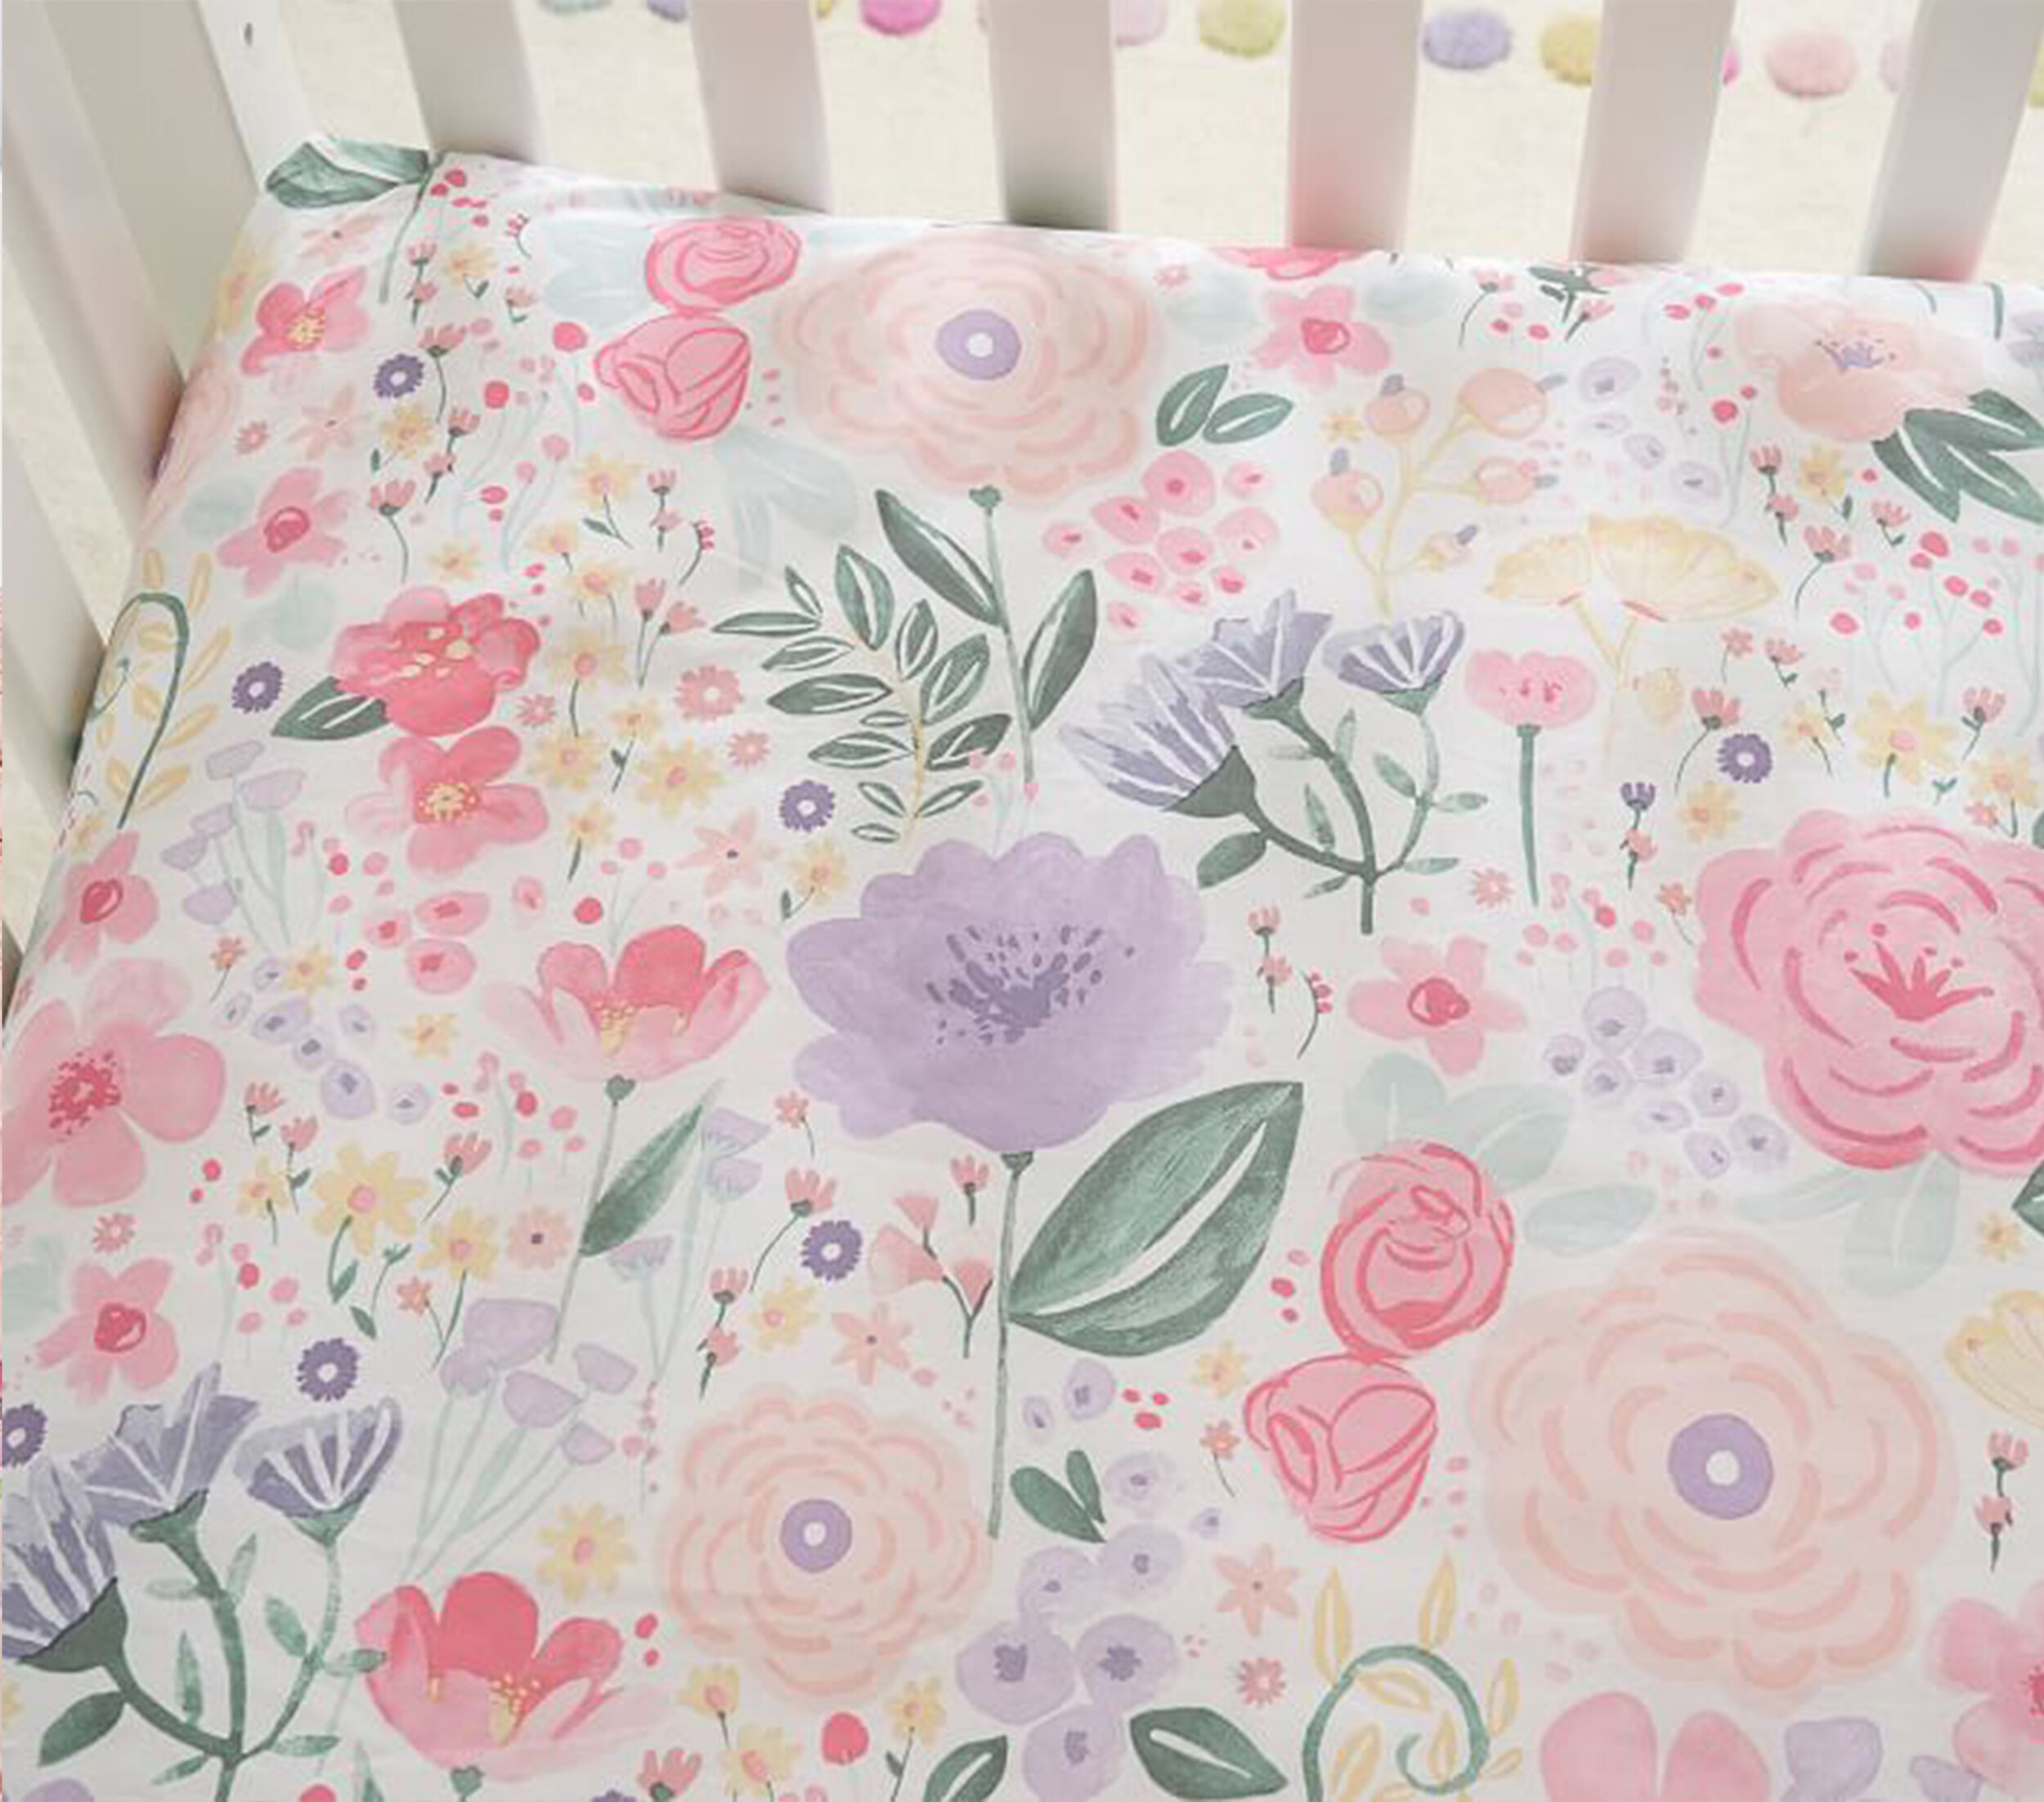 flora-baby-bedding-sets-o.jpg